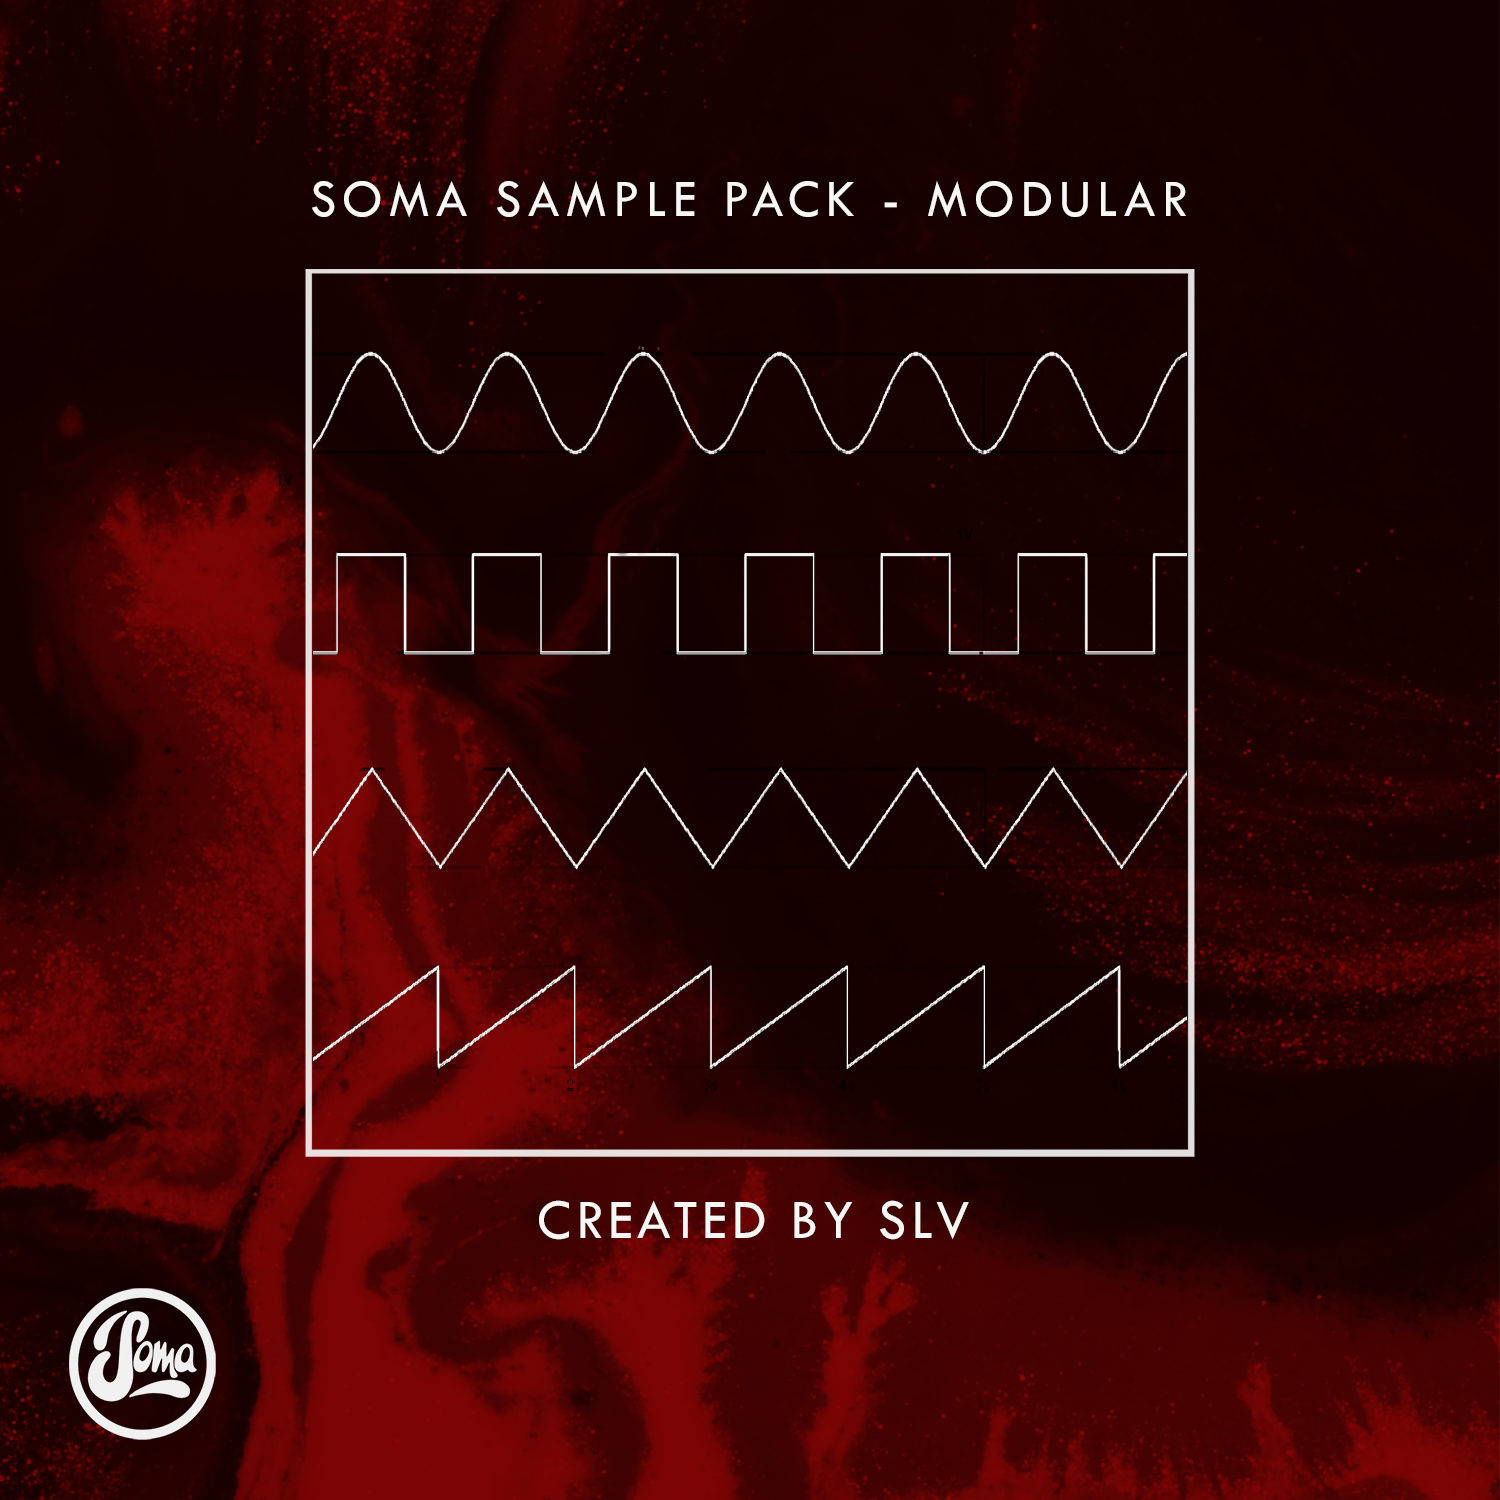 Soma Sample Pack - Modular